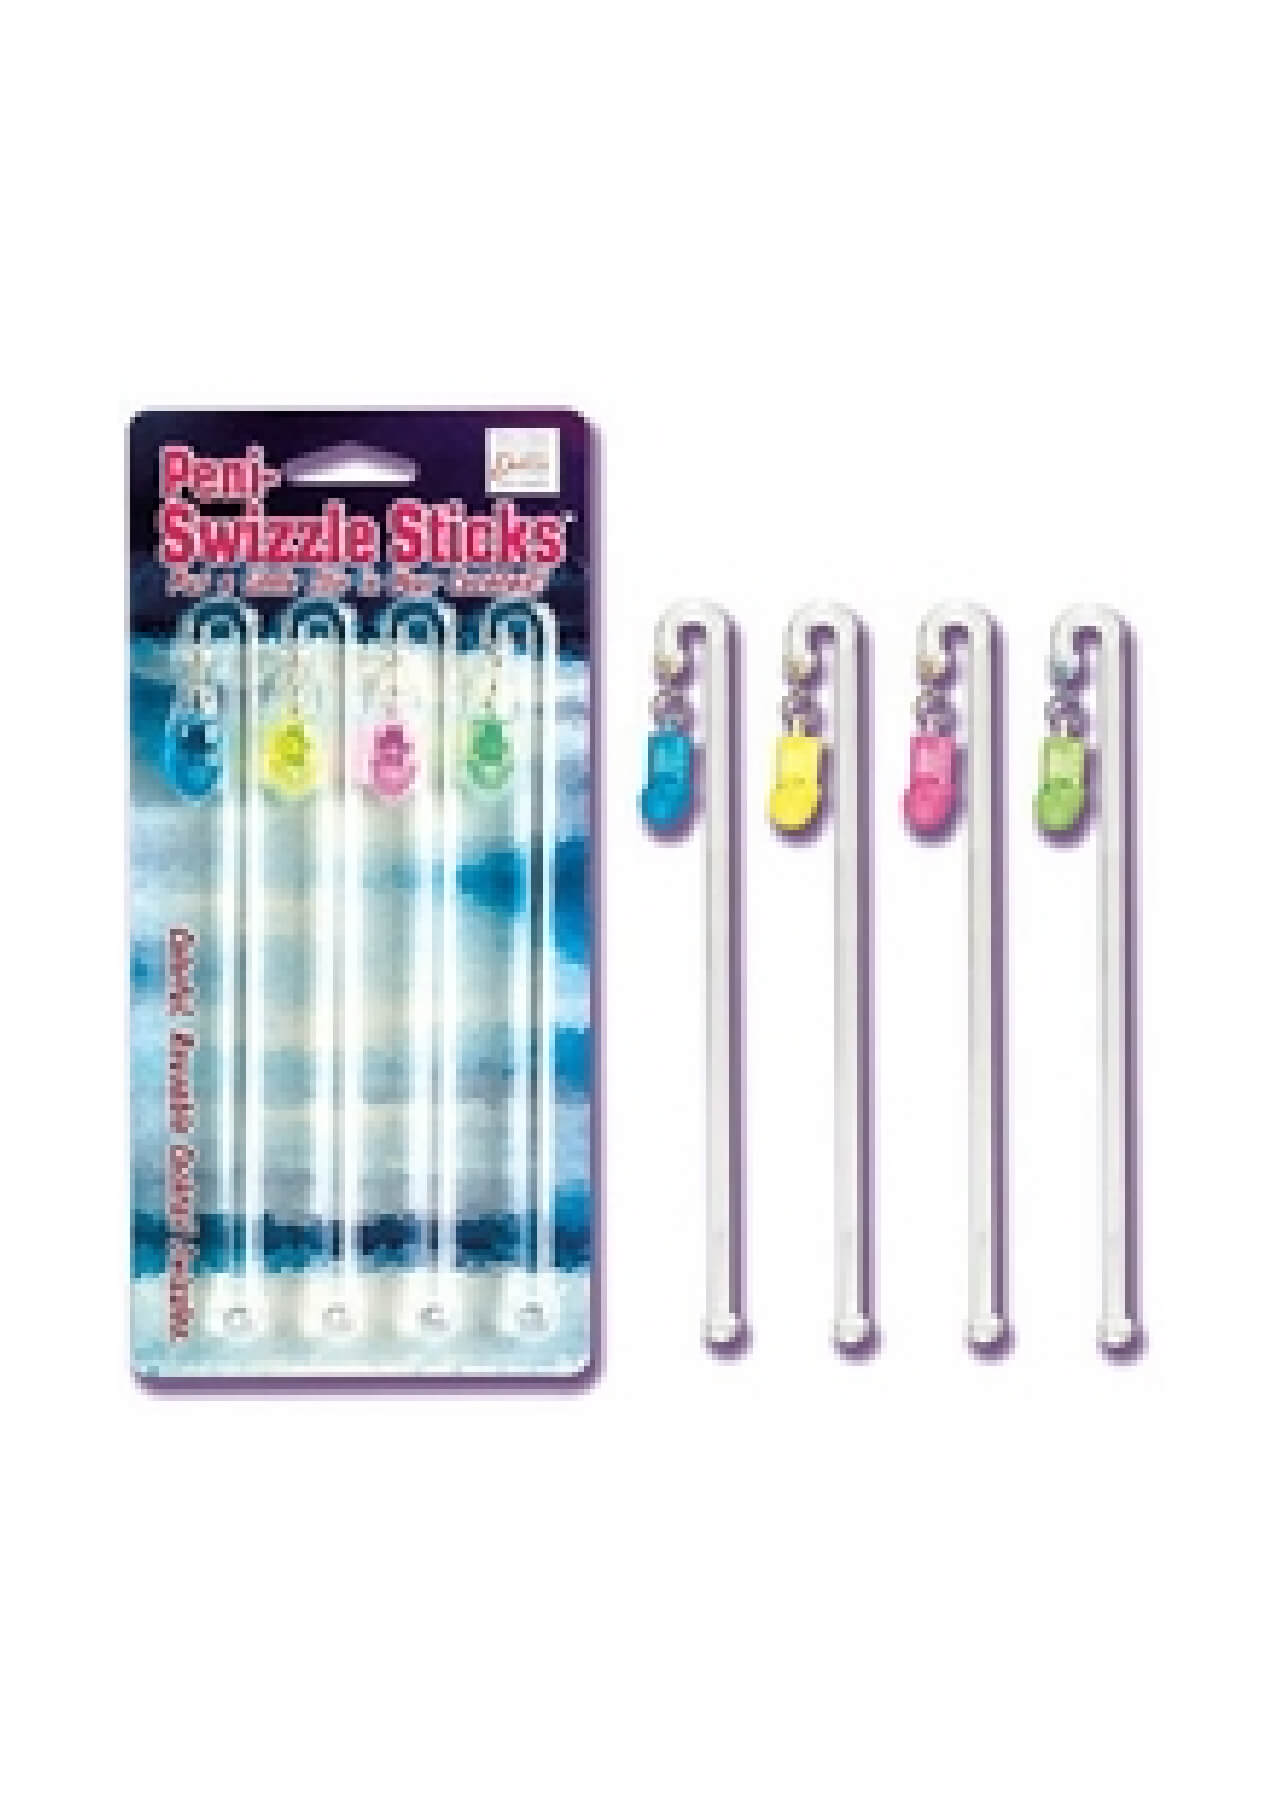 Peni-Swizzle Sticks